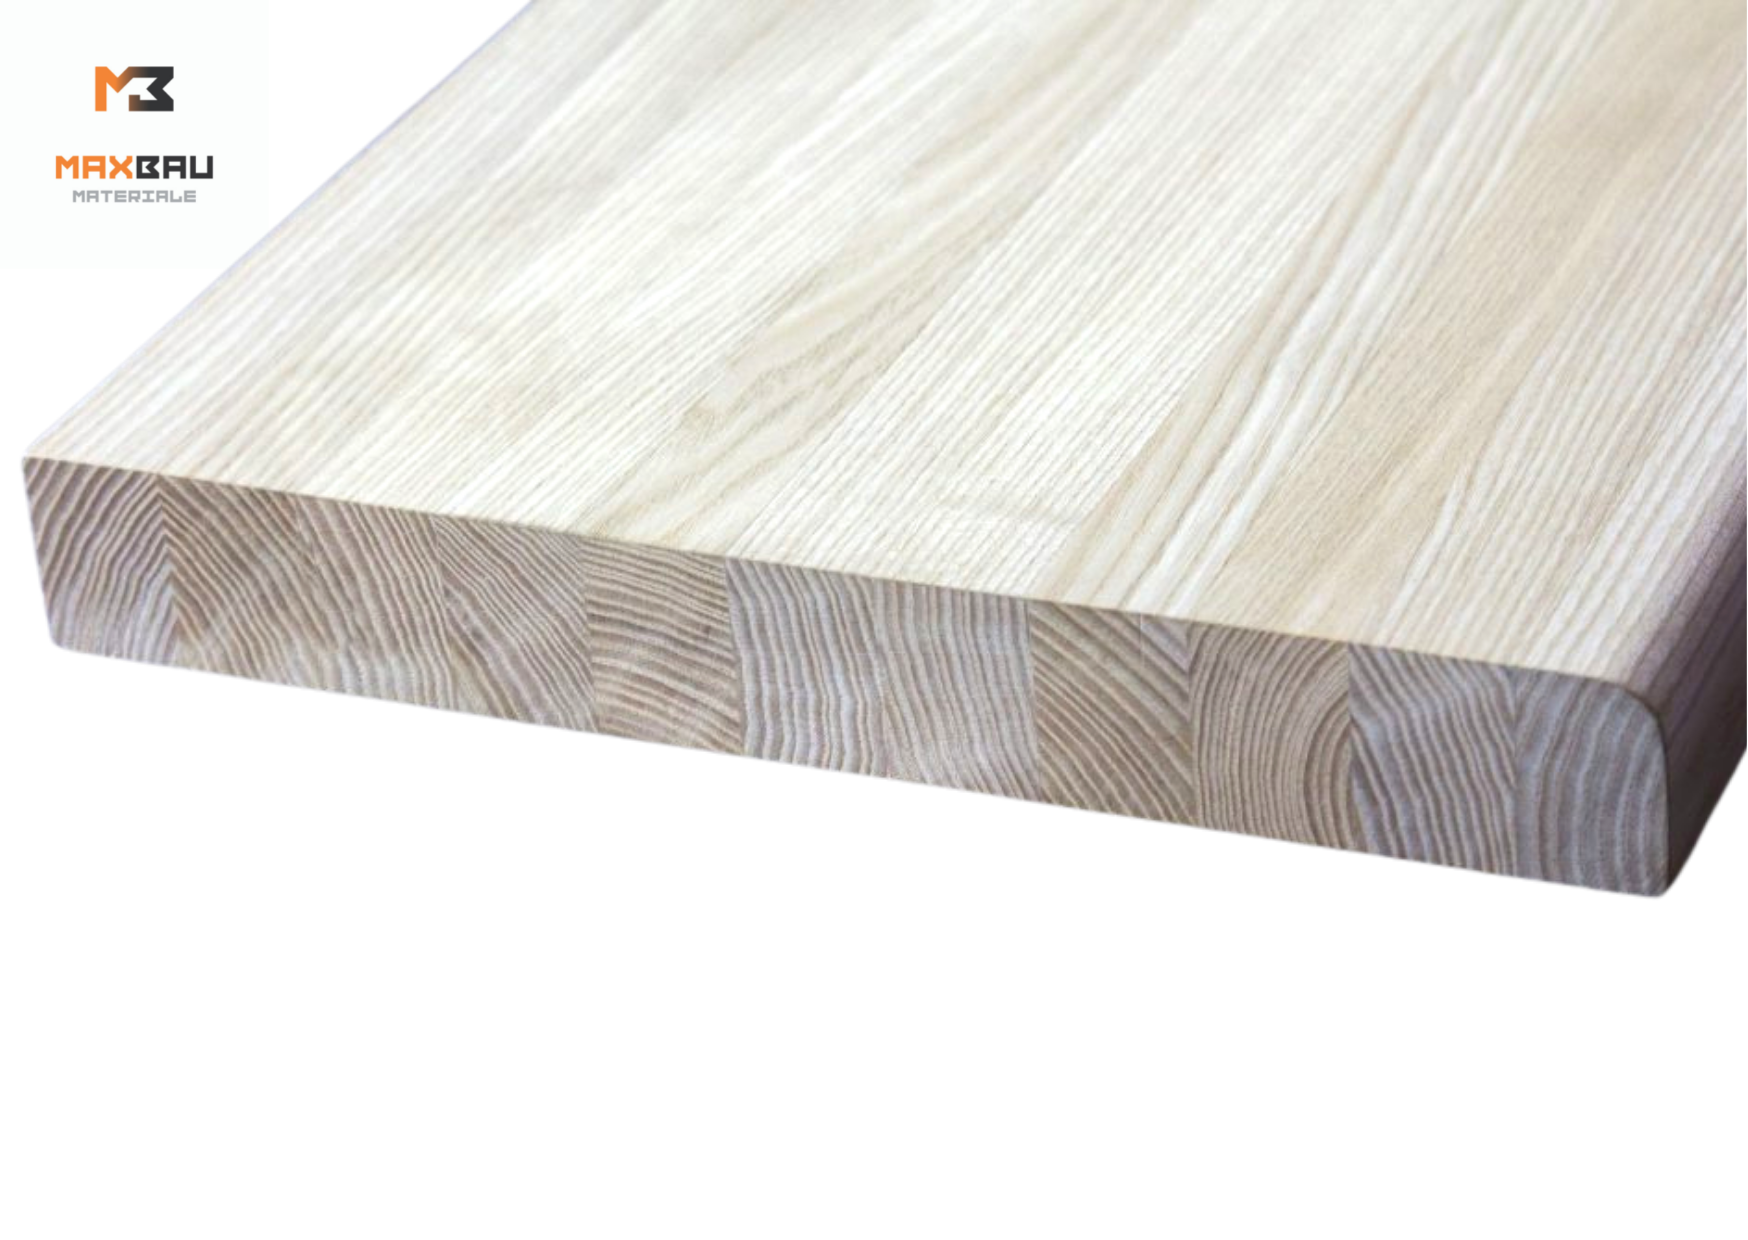 Placi din lemn incleiat - Placa de lemn incleiat MaxBau 800 x 300 x 28 mm Clasa AB, https:maxbau.ro